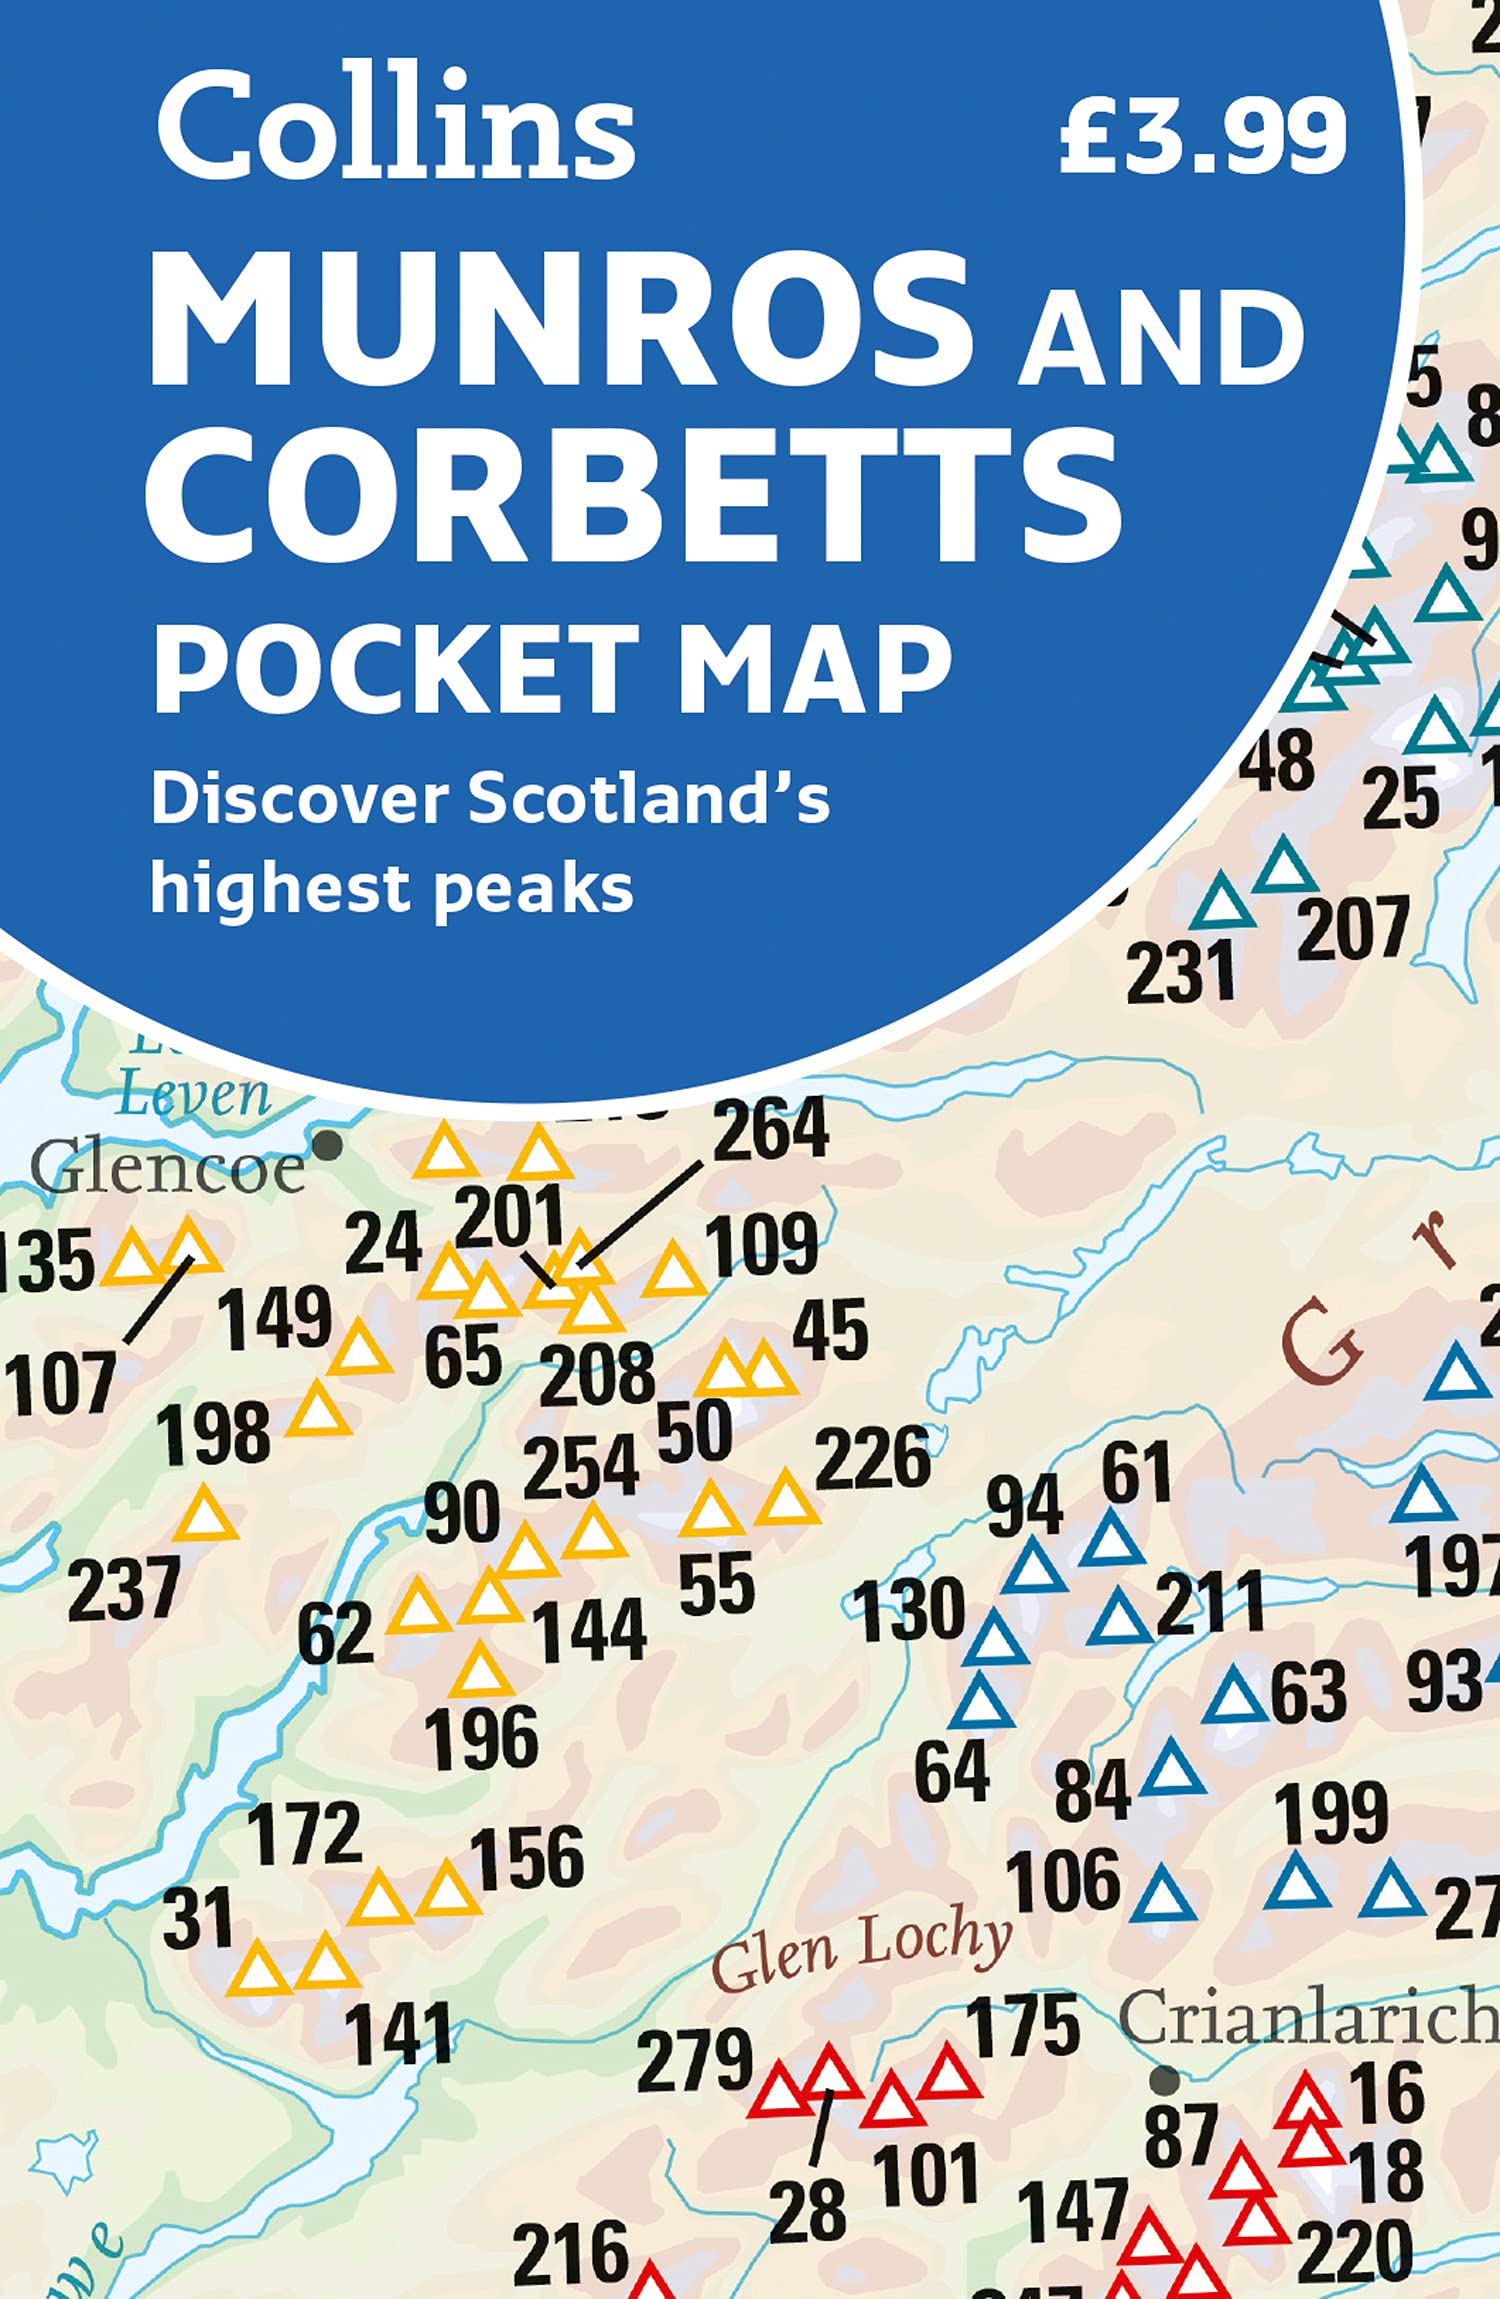 Munros & Corbetts Pocket Map by penny black